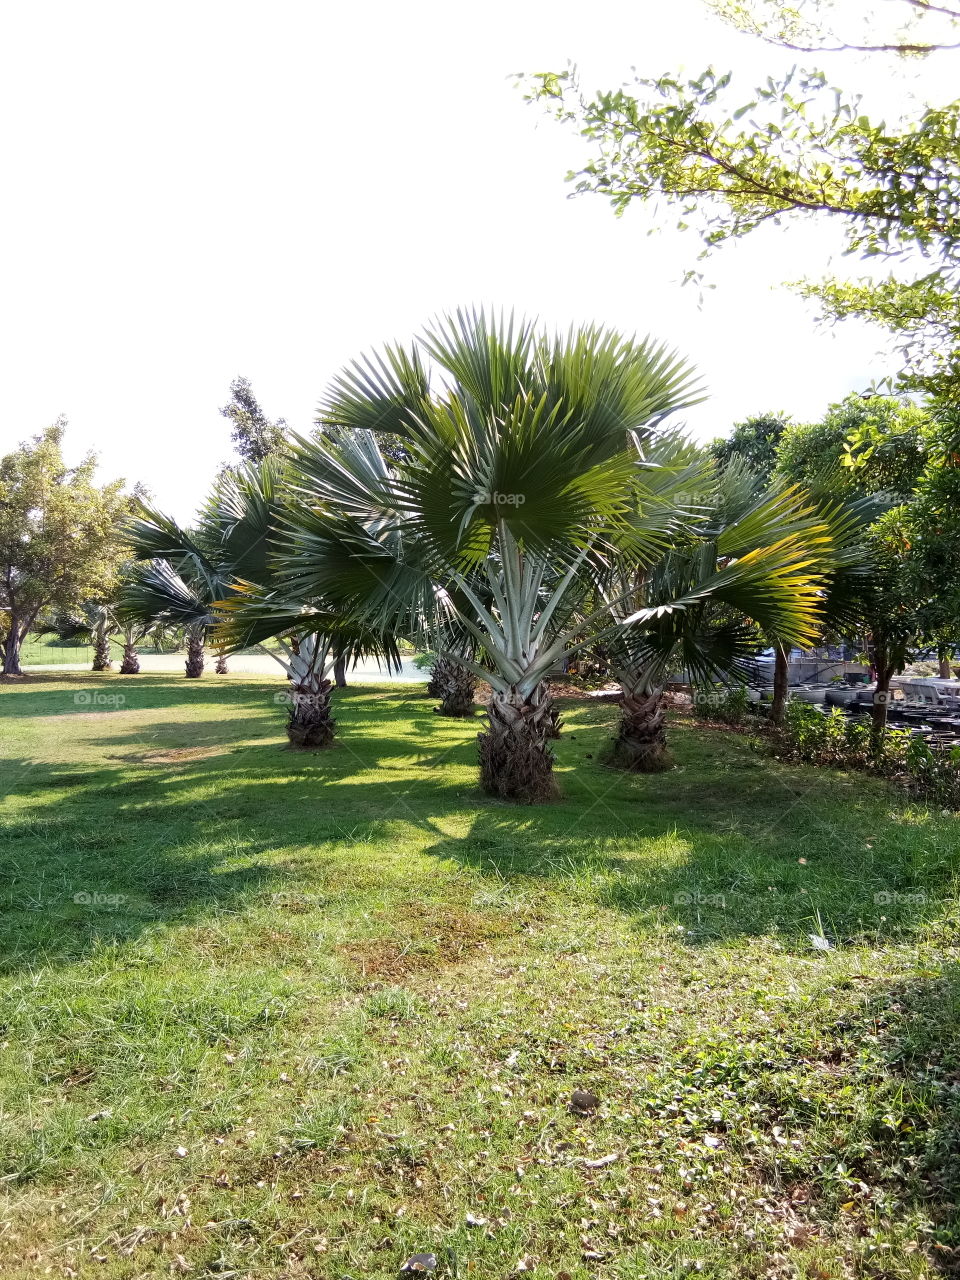 palm
garden
nature
land
tree